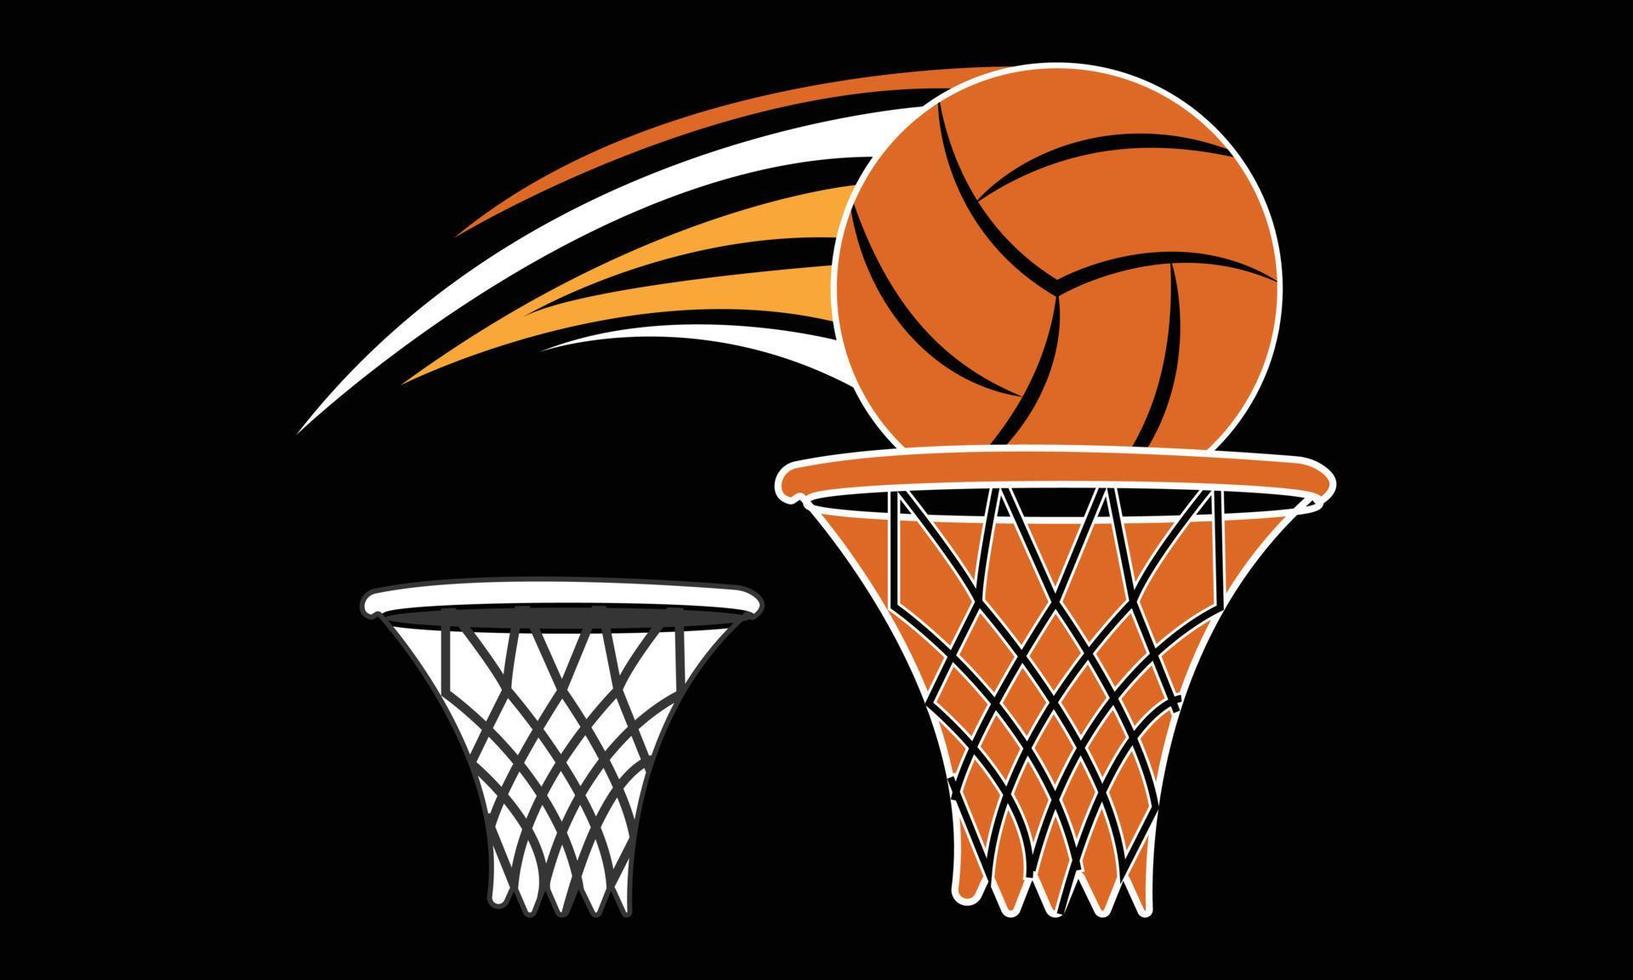 Basketball SVG Illustrations Design. vector